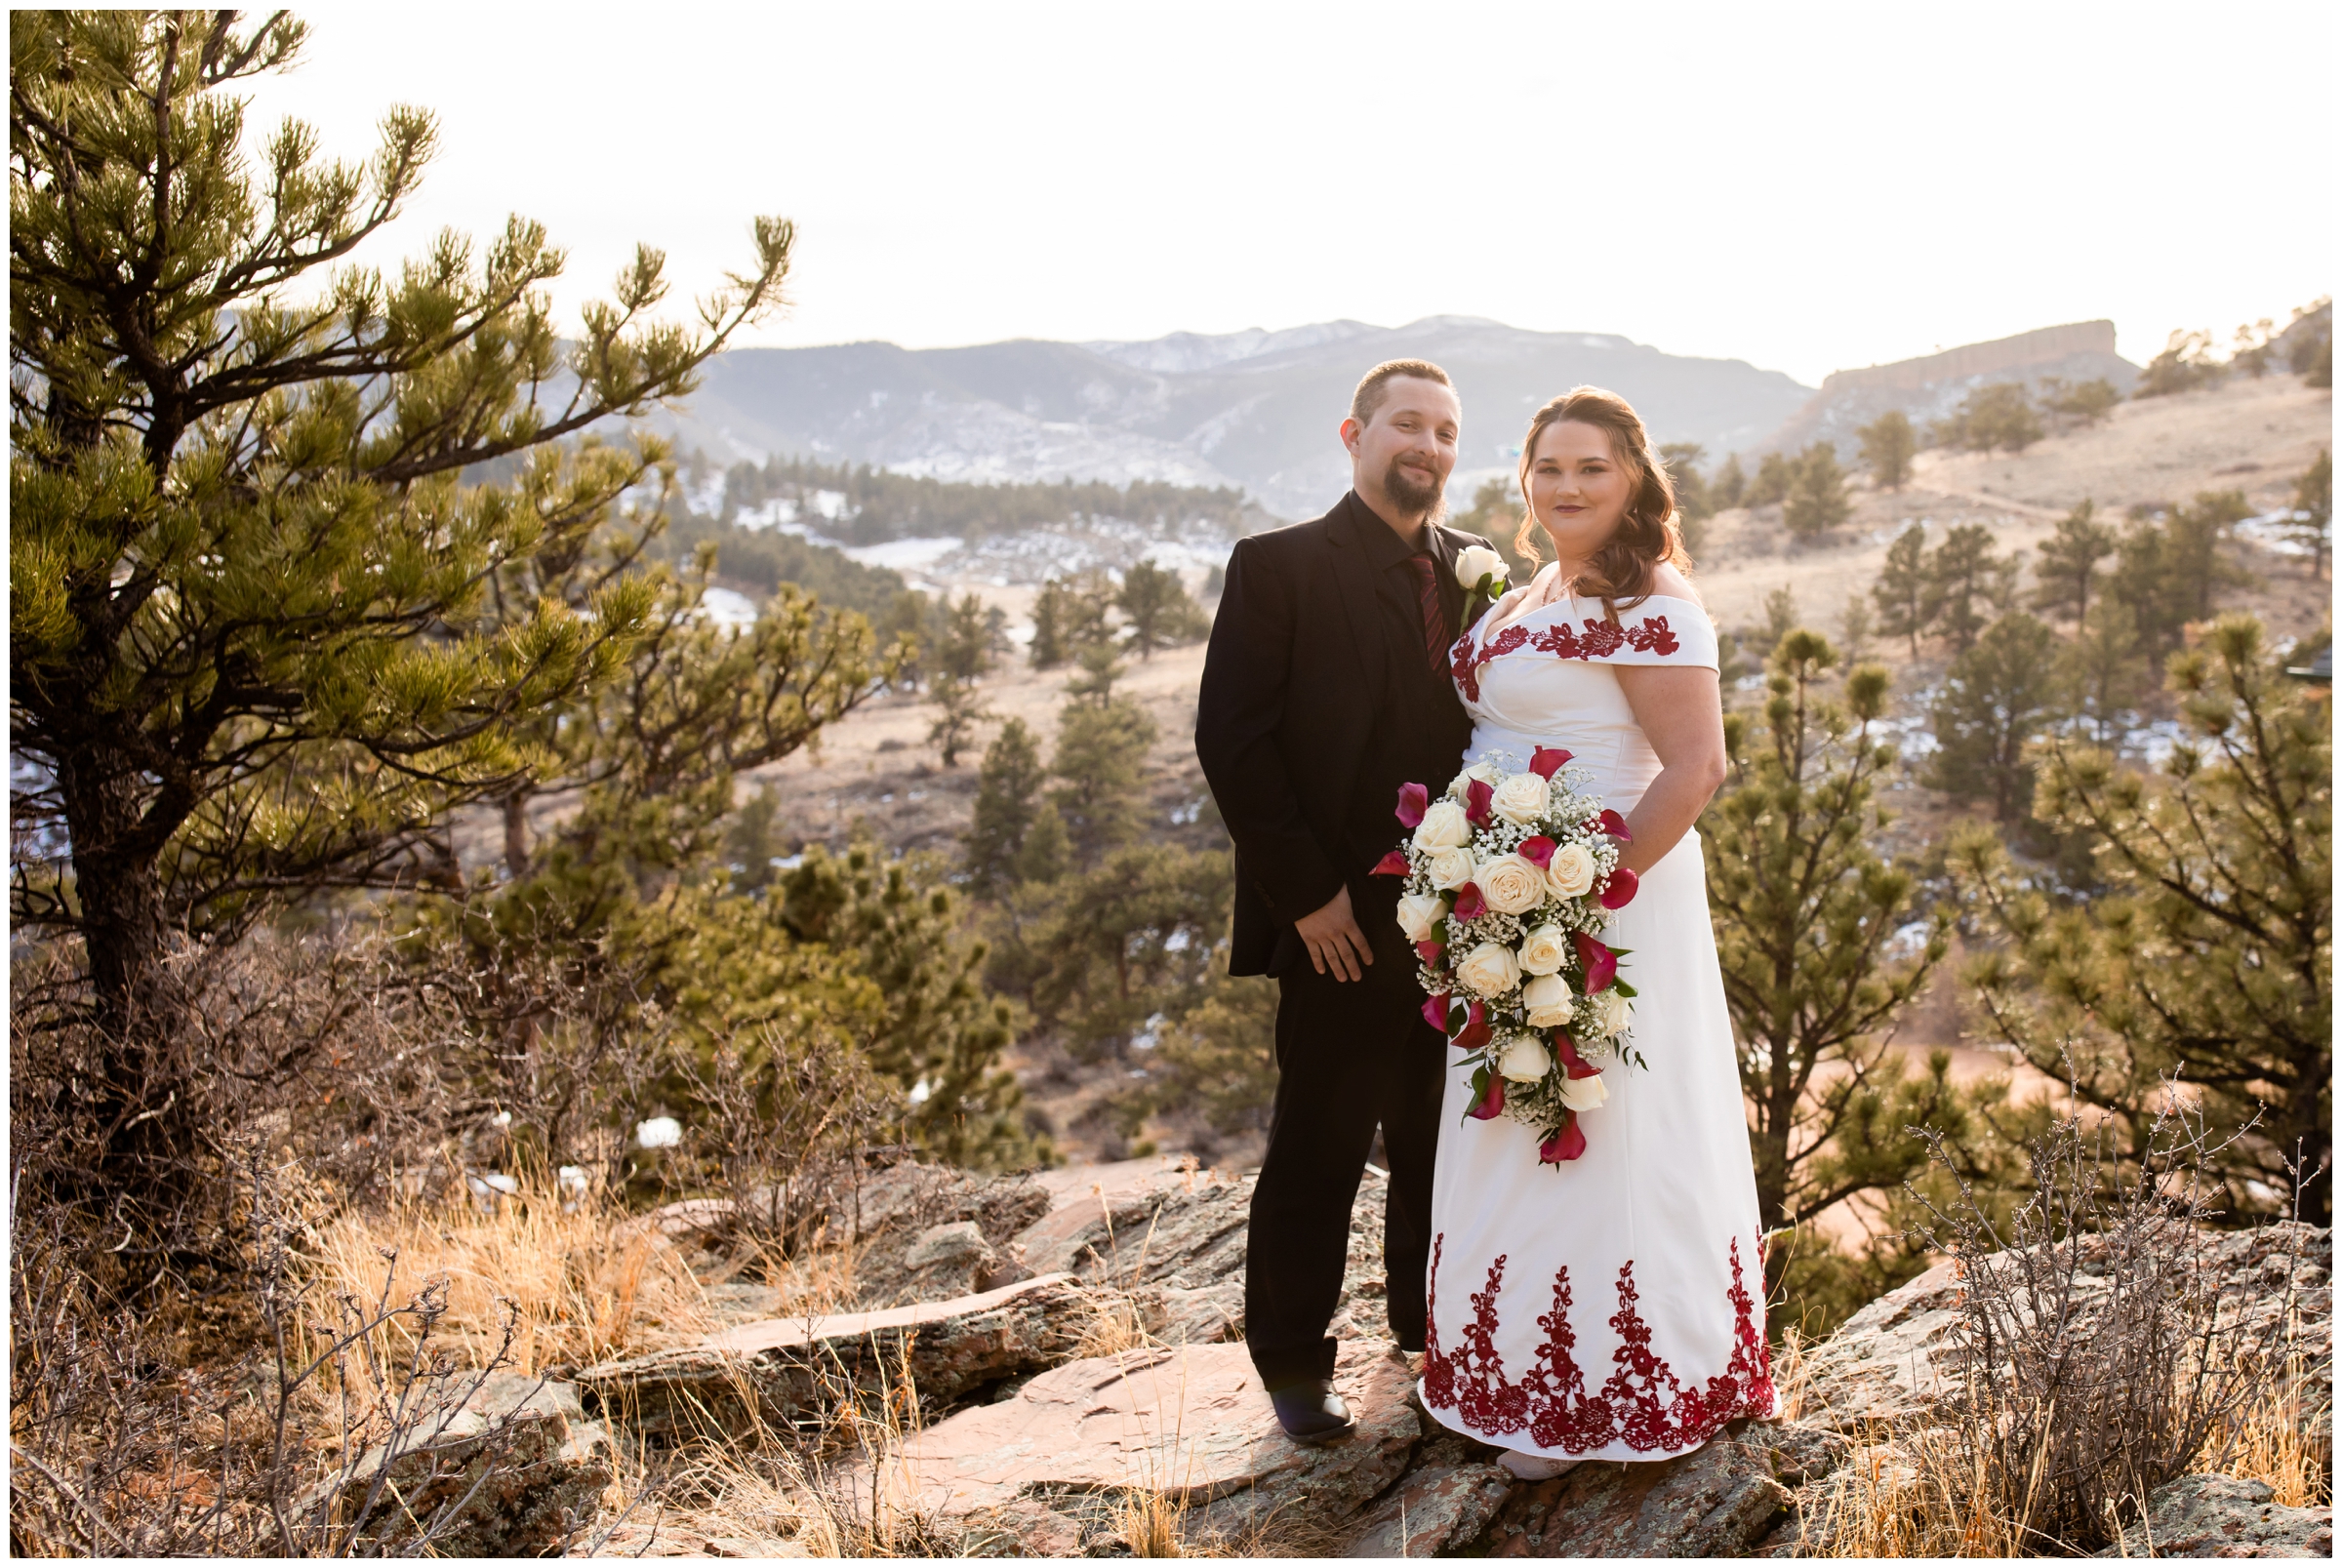 Lionscrest Manor winter wedding photos by Colorado mountain photographer Plum Pretty Photography